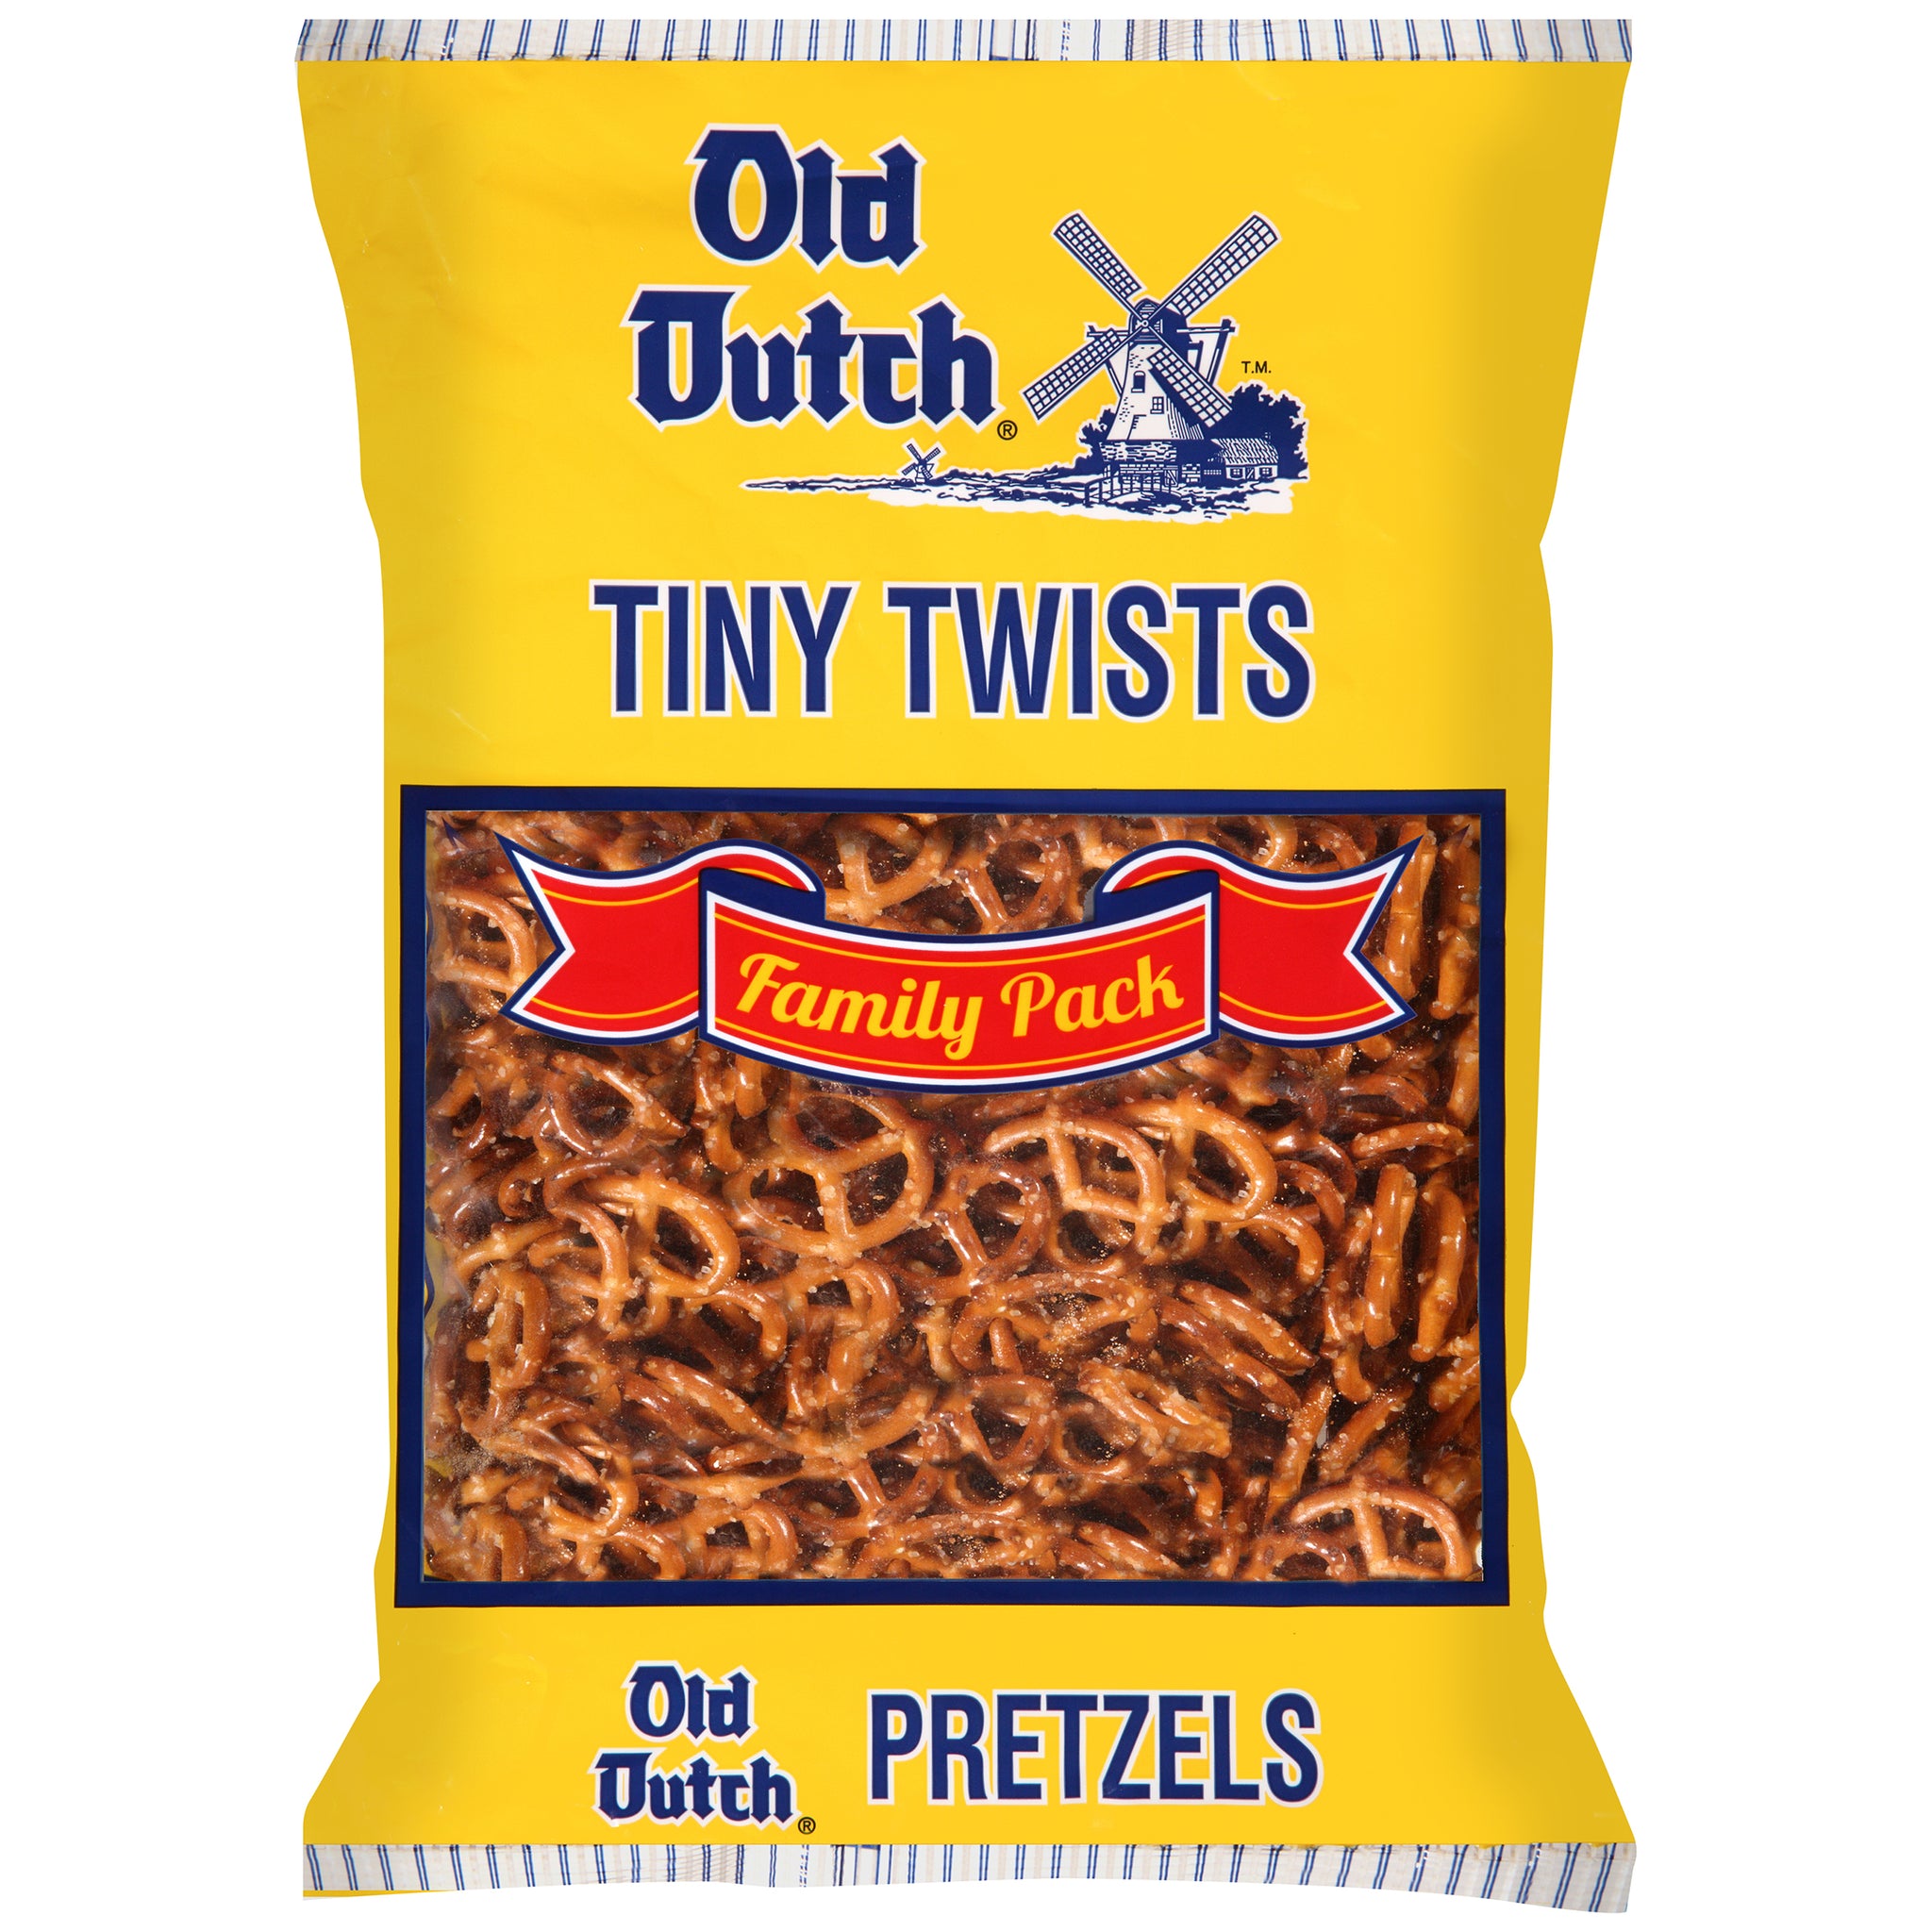 Old Dutch Tiny Twists Pretzels Family Pack